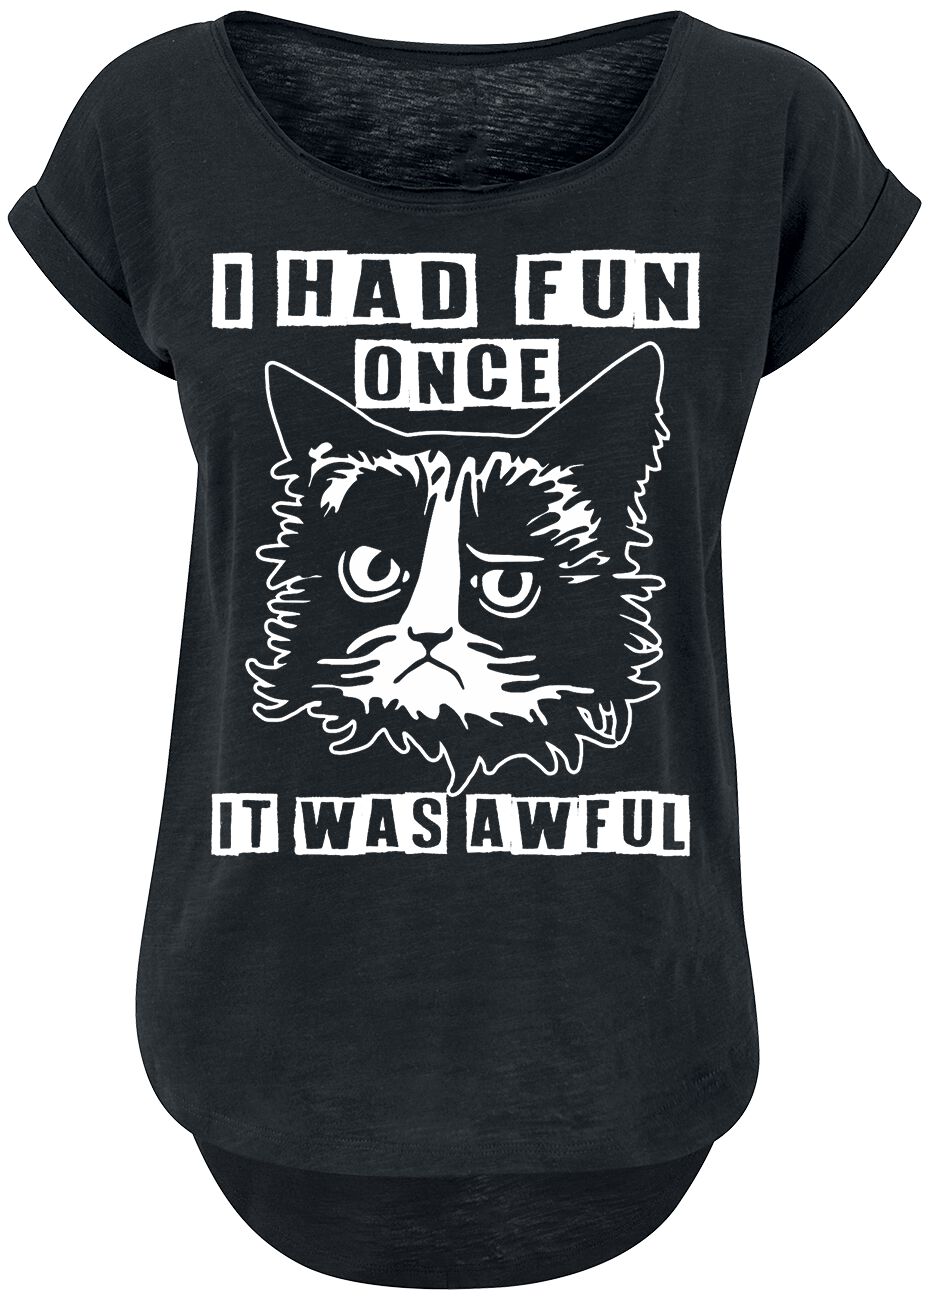 T-Shirt Manches courtes Fun de Tierisch - I Had Fun Once - It was Awful - XS à 5XL - pour Femme - no